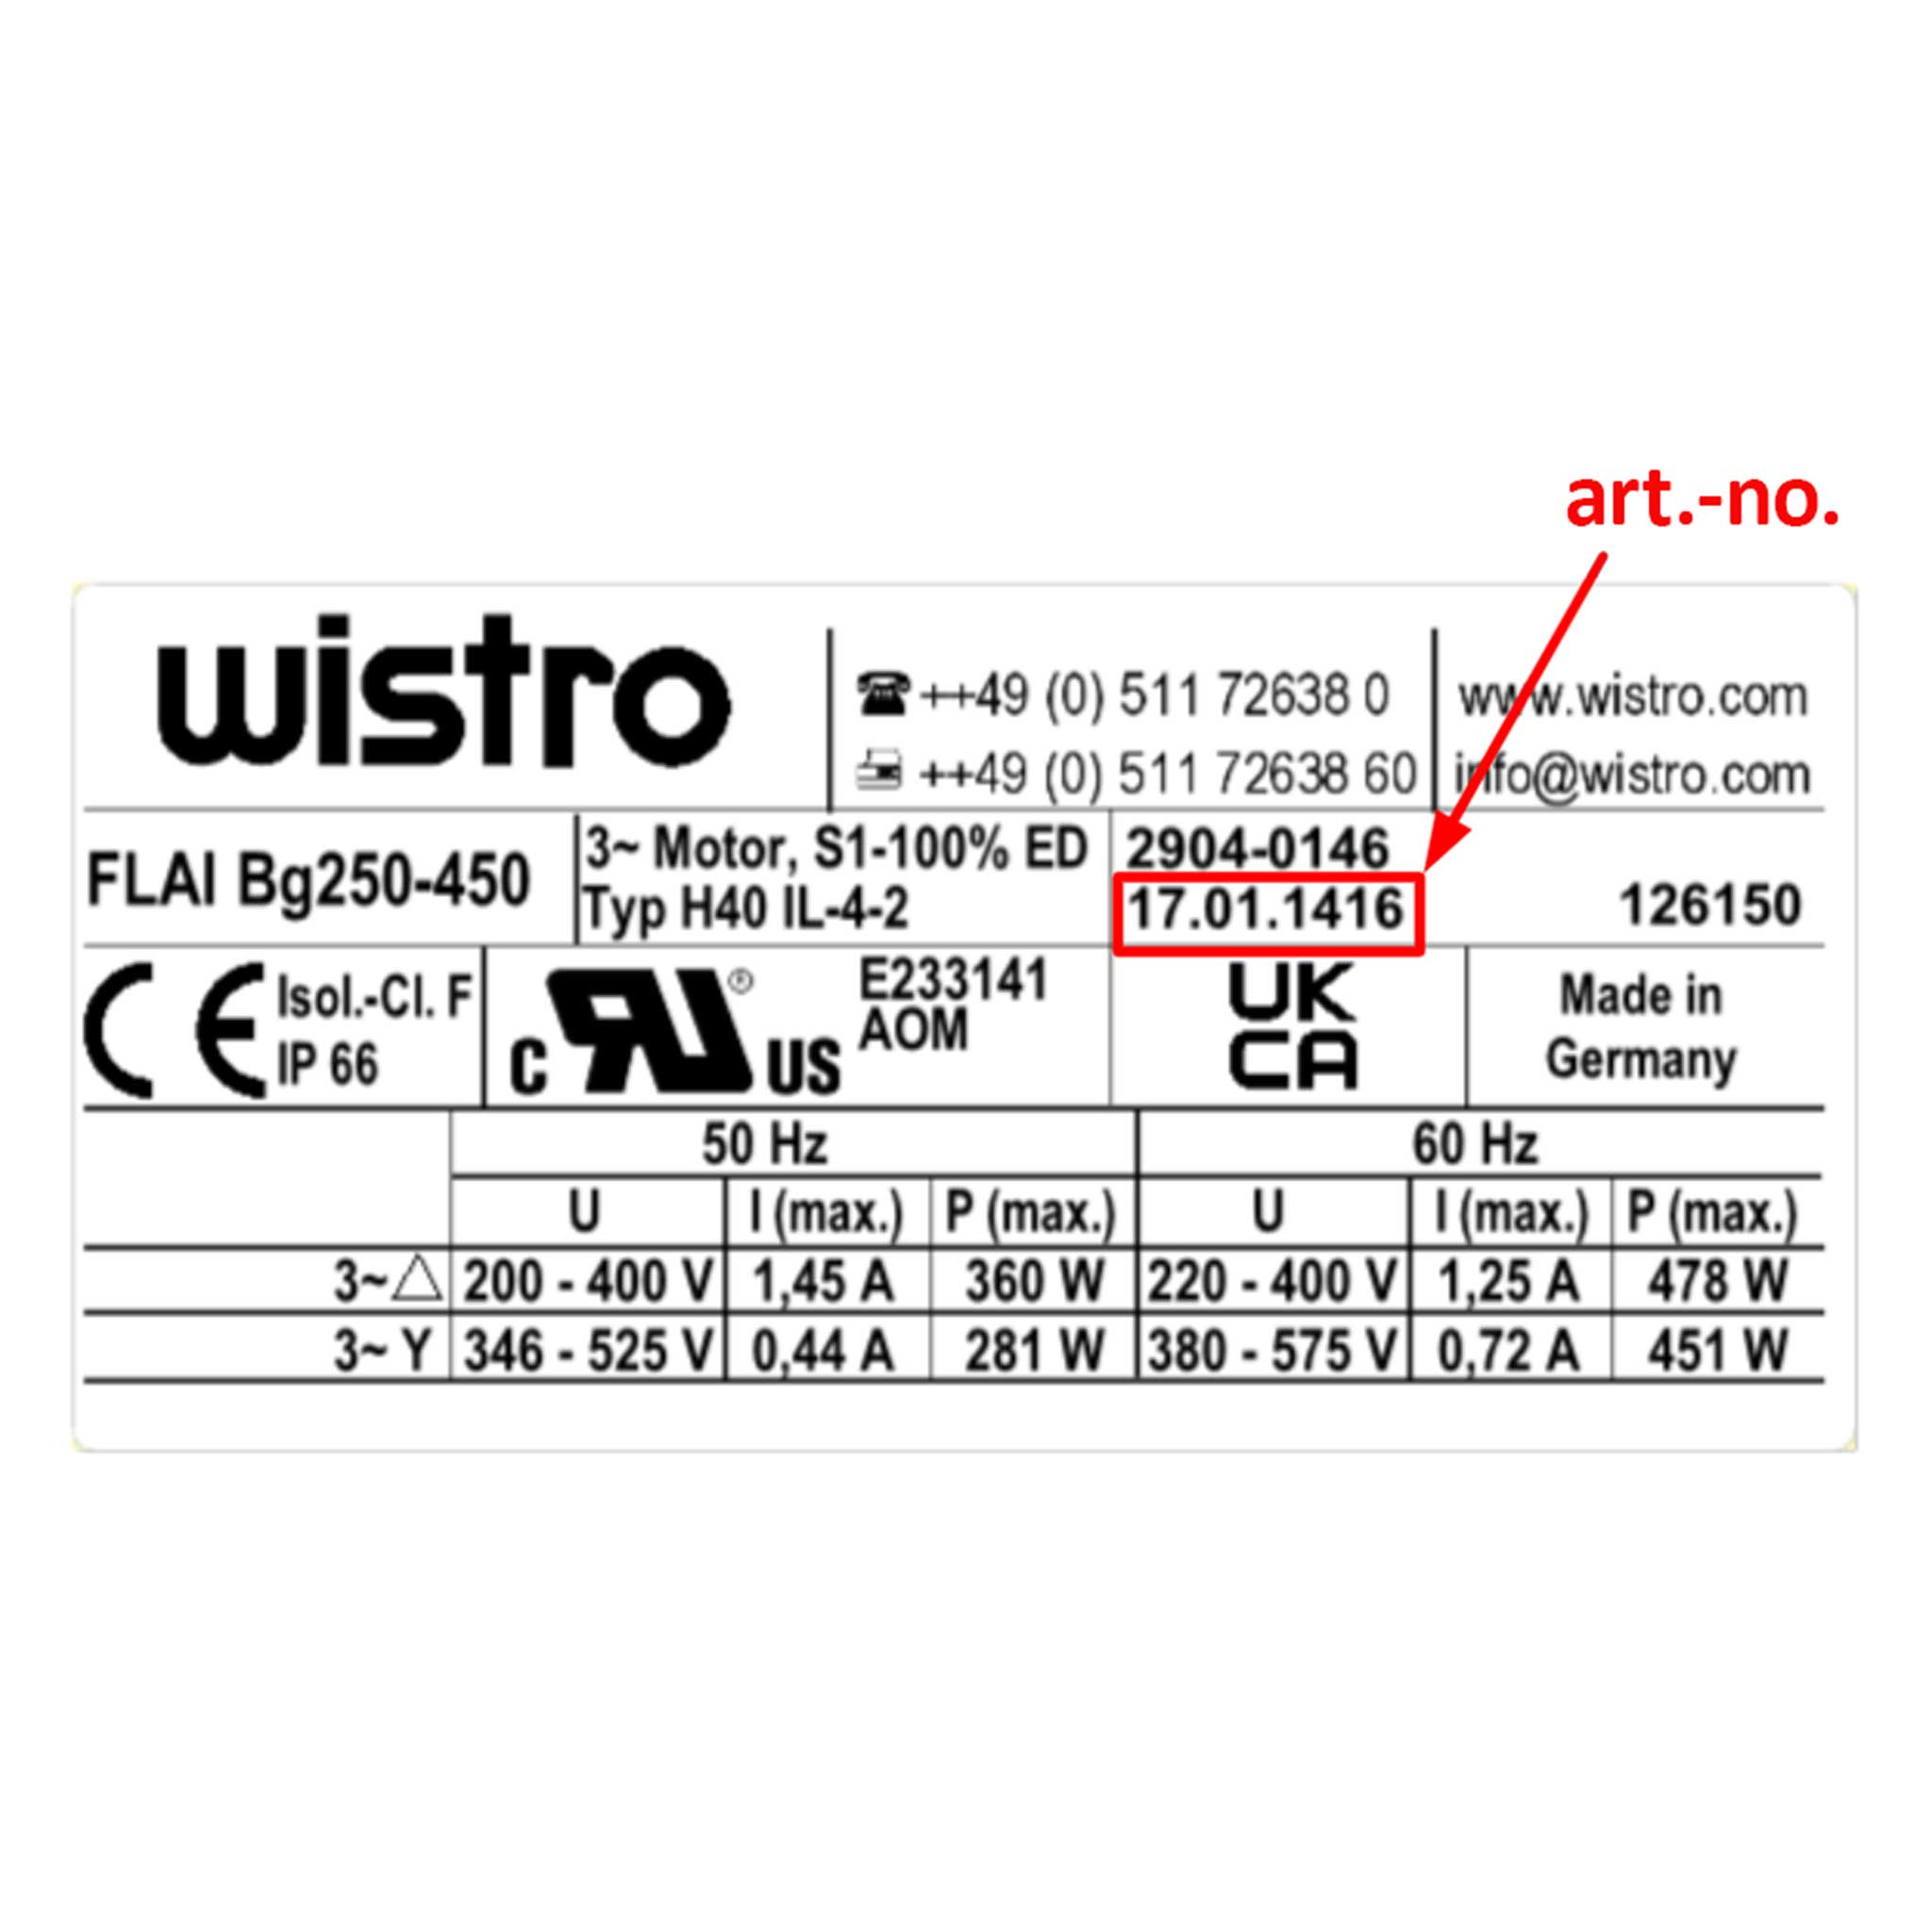 Wistro External Fan Size 63-200 - Three Phase